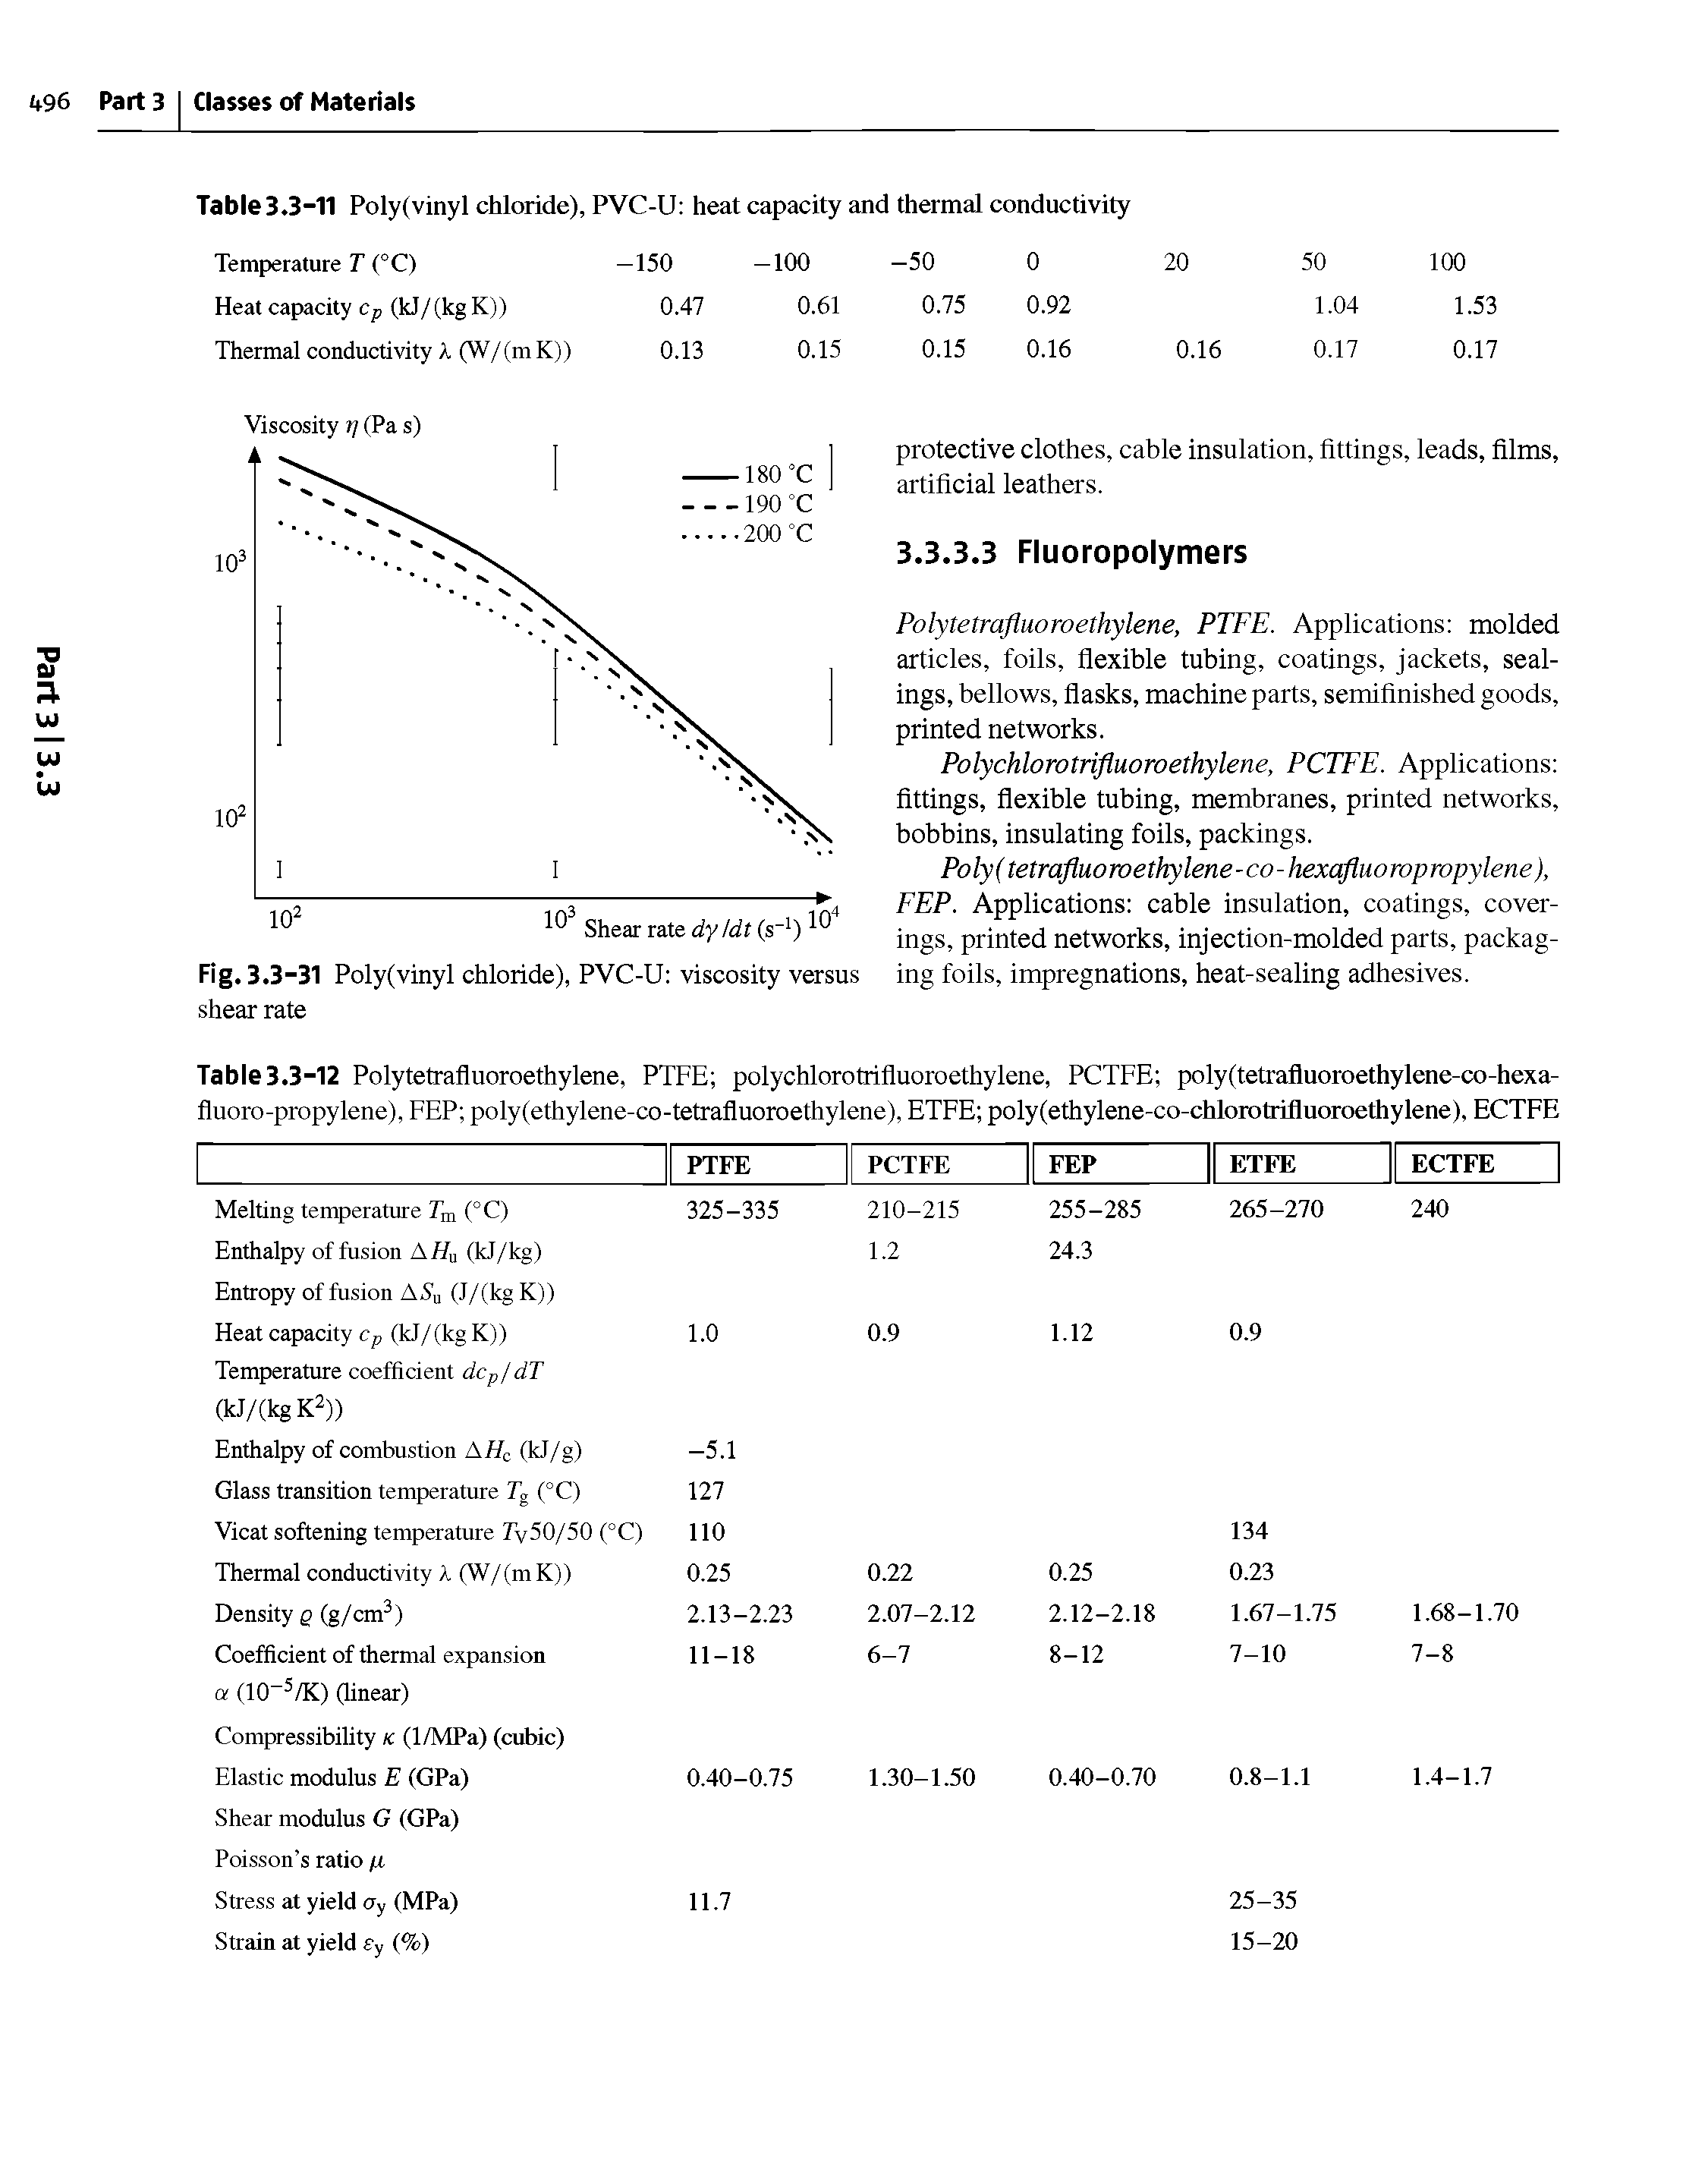 Table 3.3-12 Polytetrafluoroethylene, PTFE polychlorotrifluoroethylene, PCTFE poly(tetrafluoroethylene-co-hexa-fluoro-propylene), FEP poly(ethylene-co-tetrafluoroethylene), ETFE poly(ethylene-co-chlorotrifluoroethylene), ECTFE...